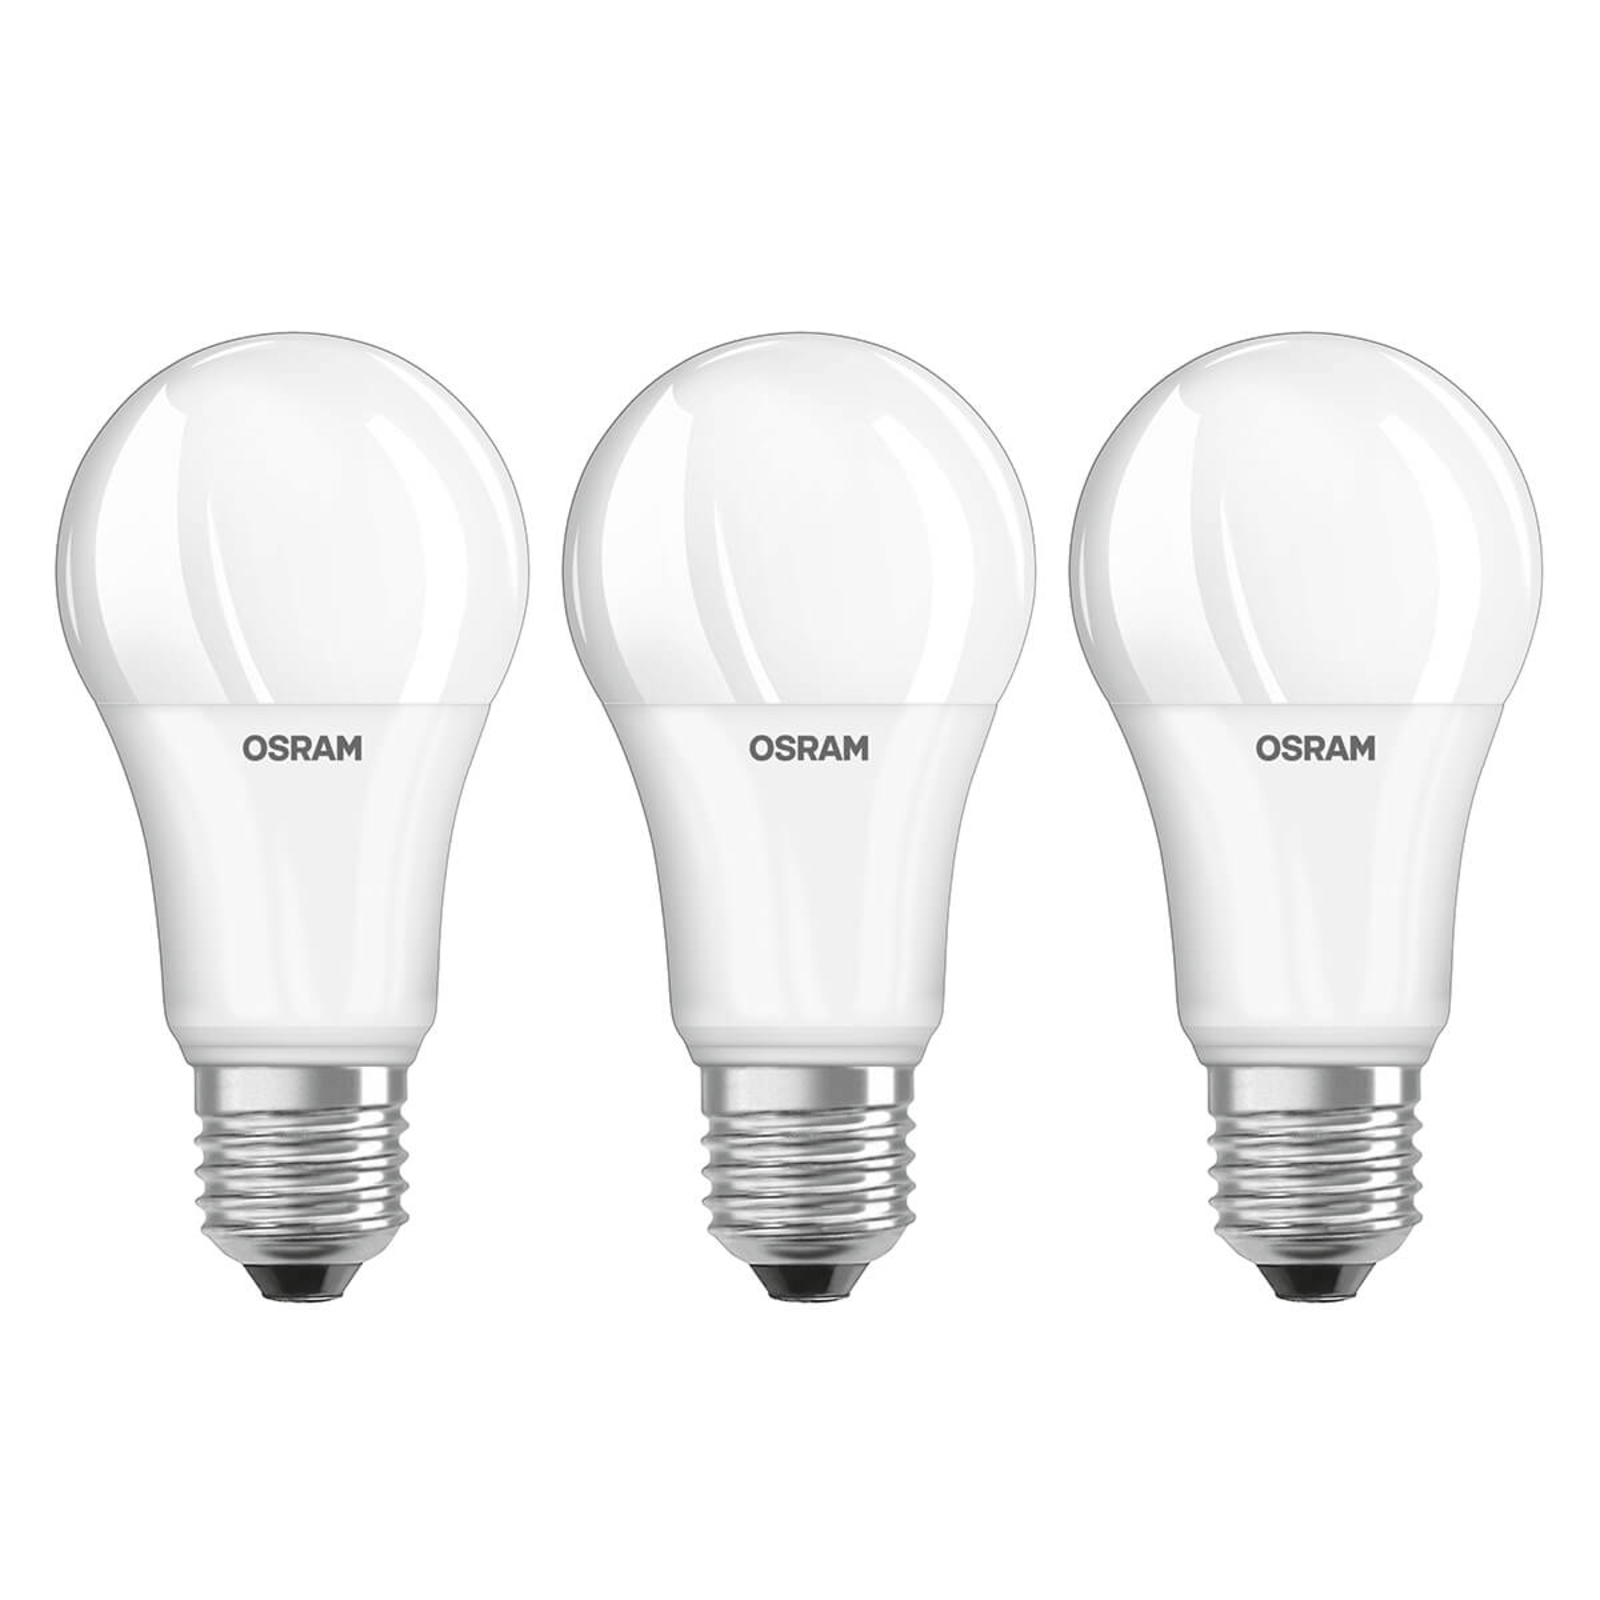 Schijnen Encommium vee LED-pære E27 13 W, universalhvid, sæt med 3 stk | Lampegiganten.dk